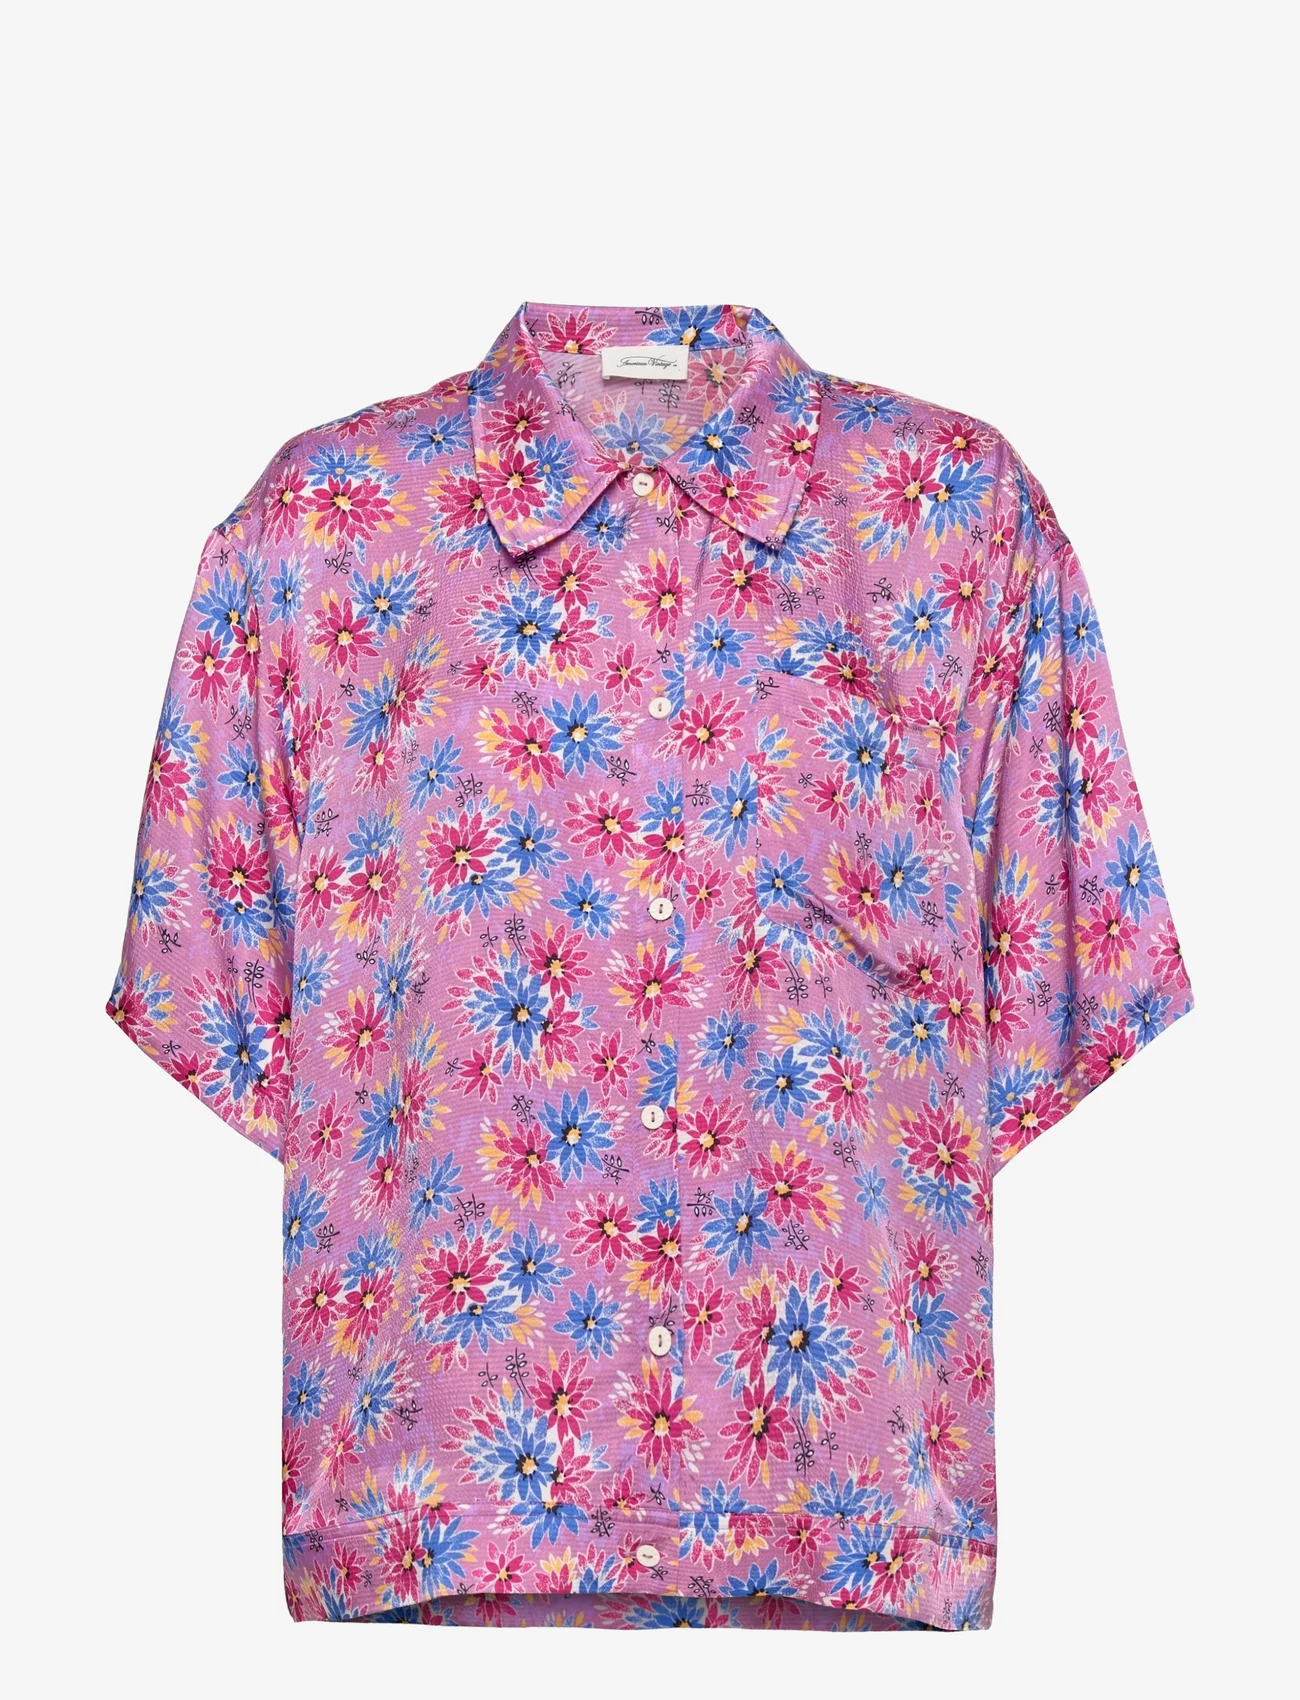 American Vintage - GINTOWN - kurzärmlige hemden - alma - 0